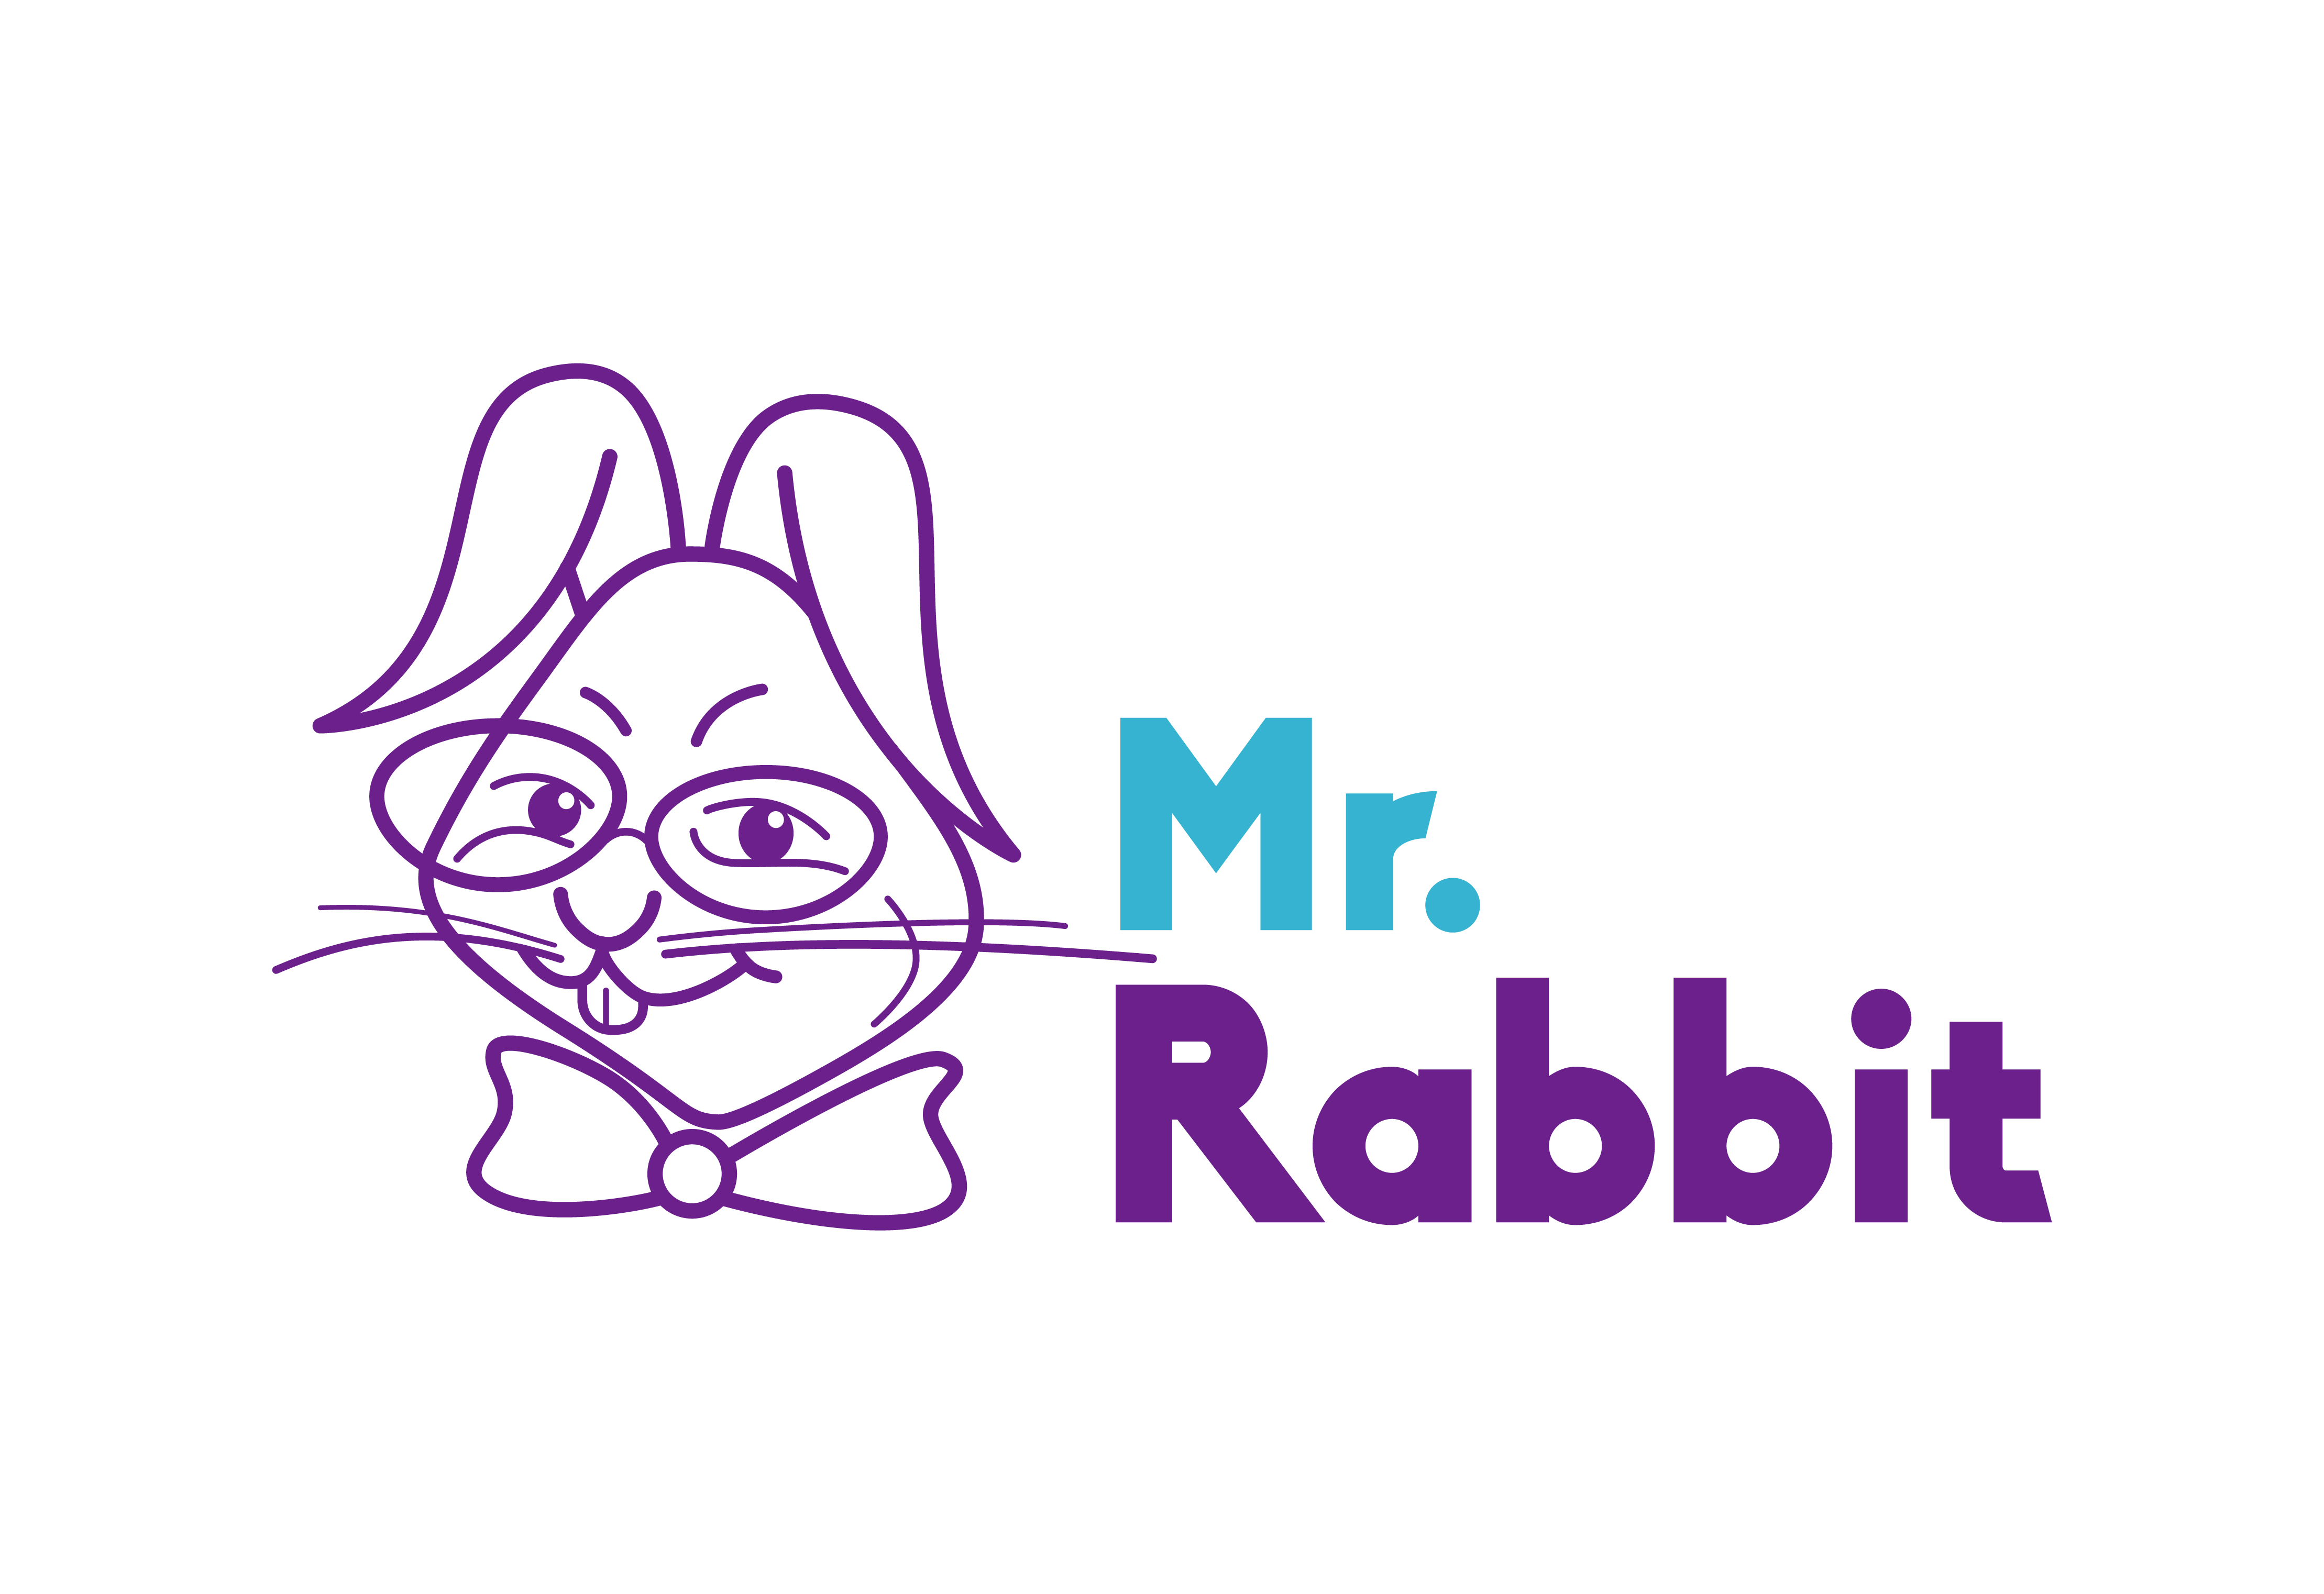 lo mr. Rabbit